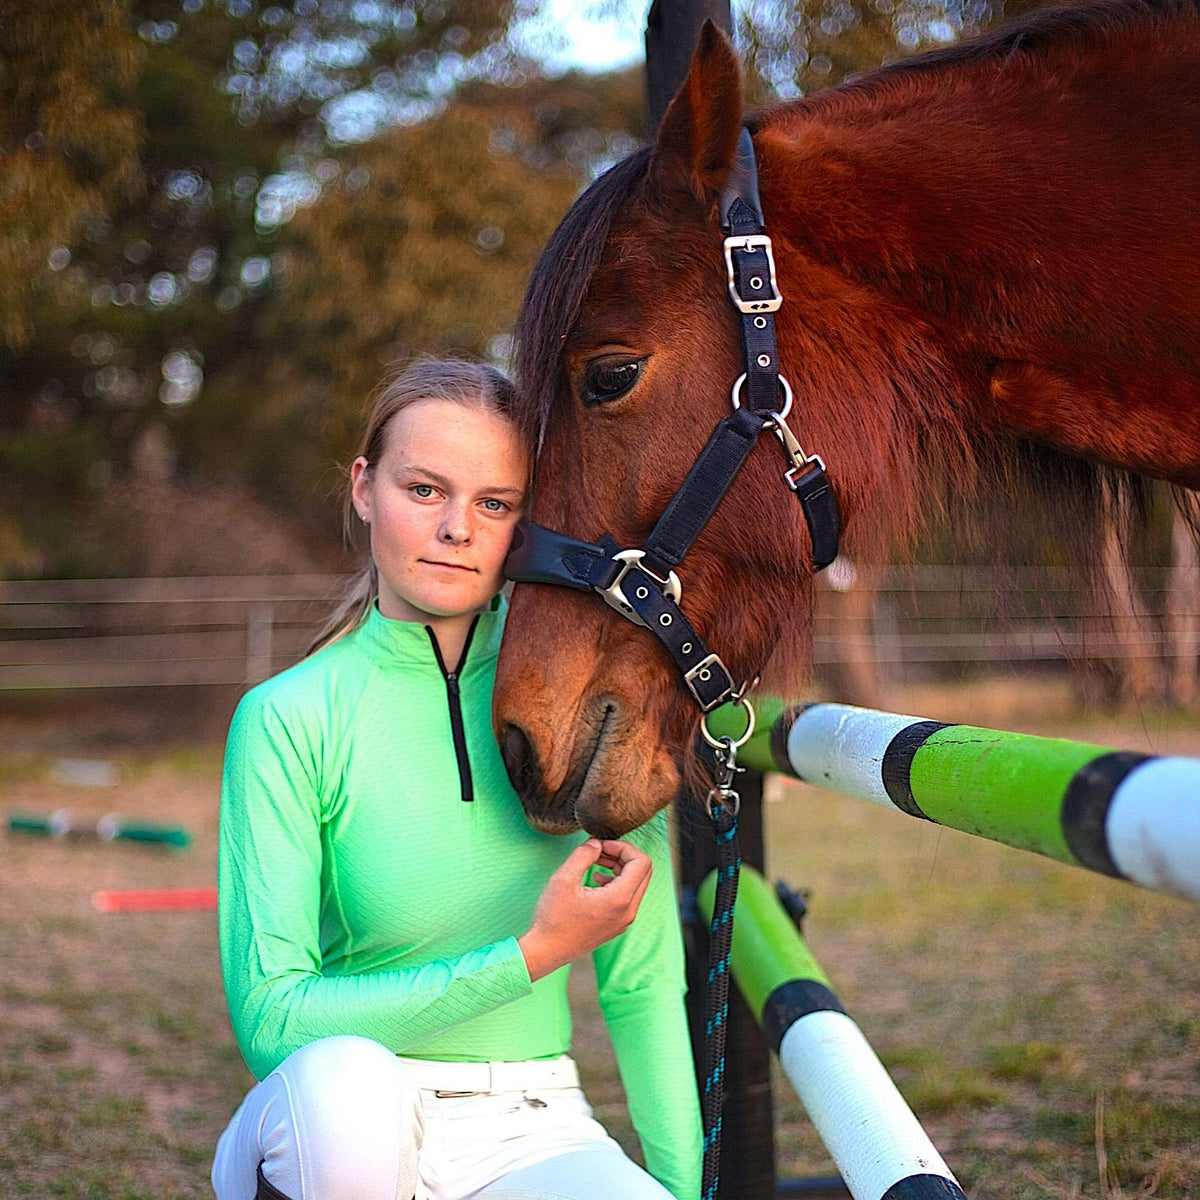 Lady kneeling beside a horse, wearing a green long sleeve shirt.